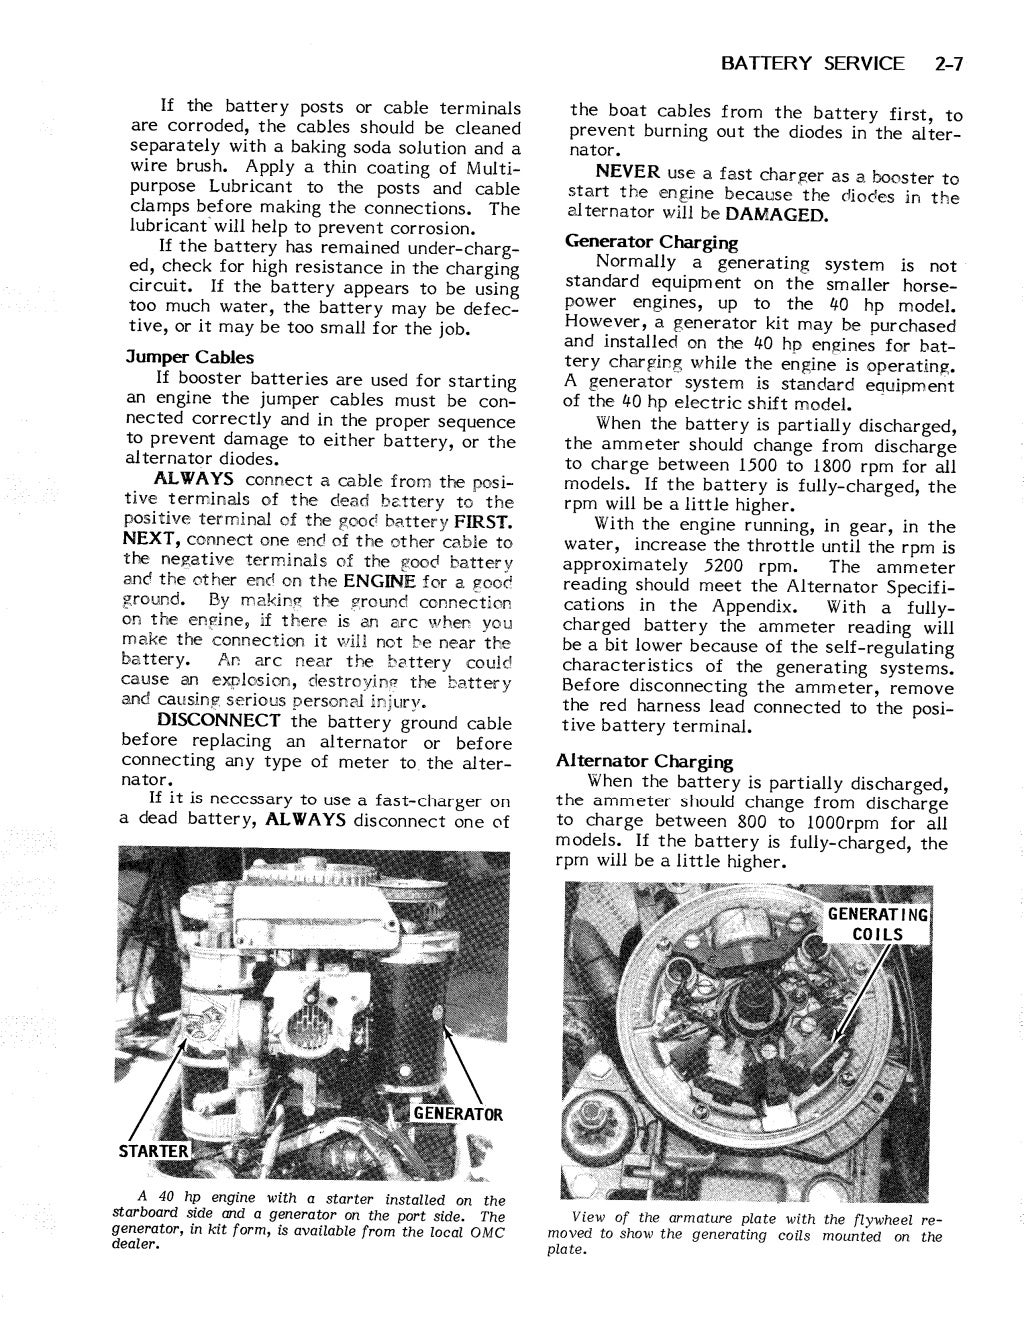 1974 johnson evinrude outboard 8 hp service repair manual